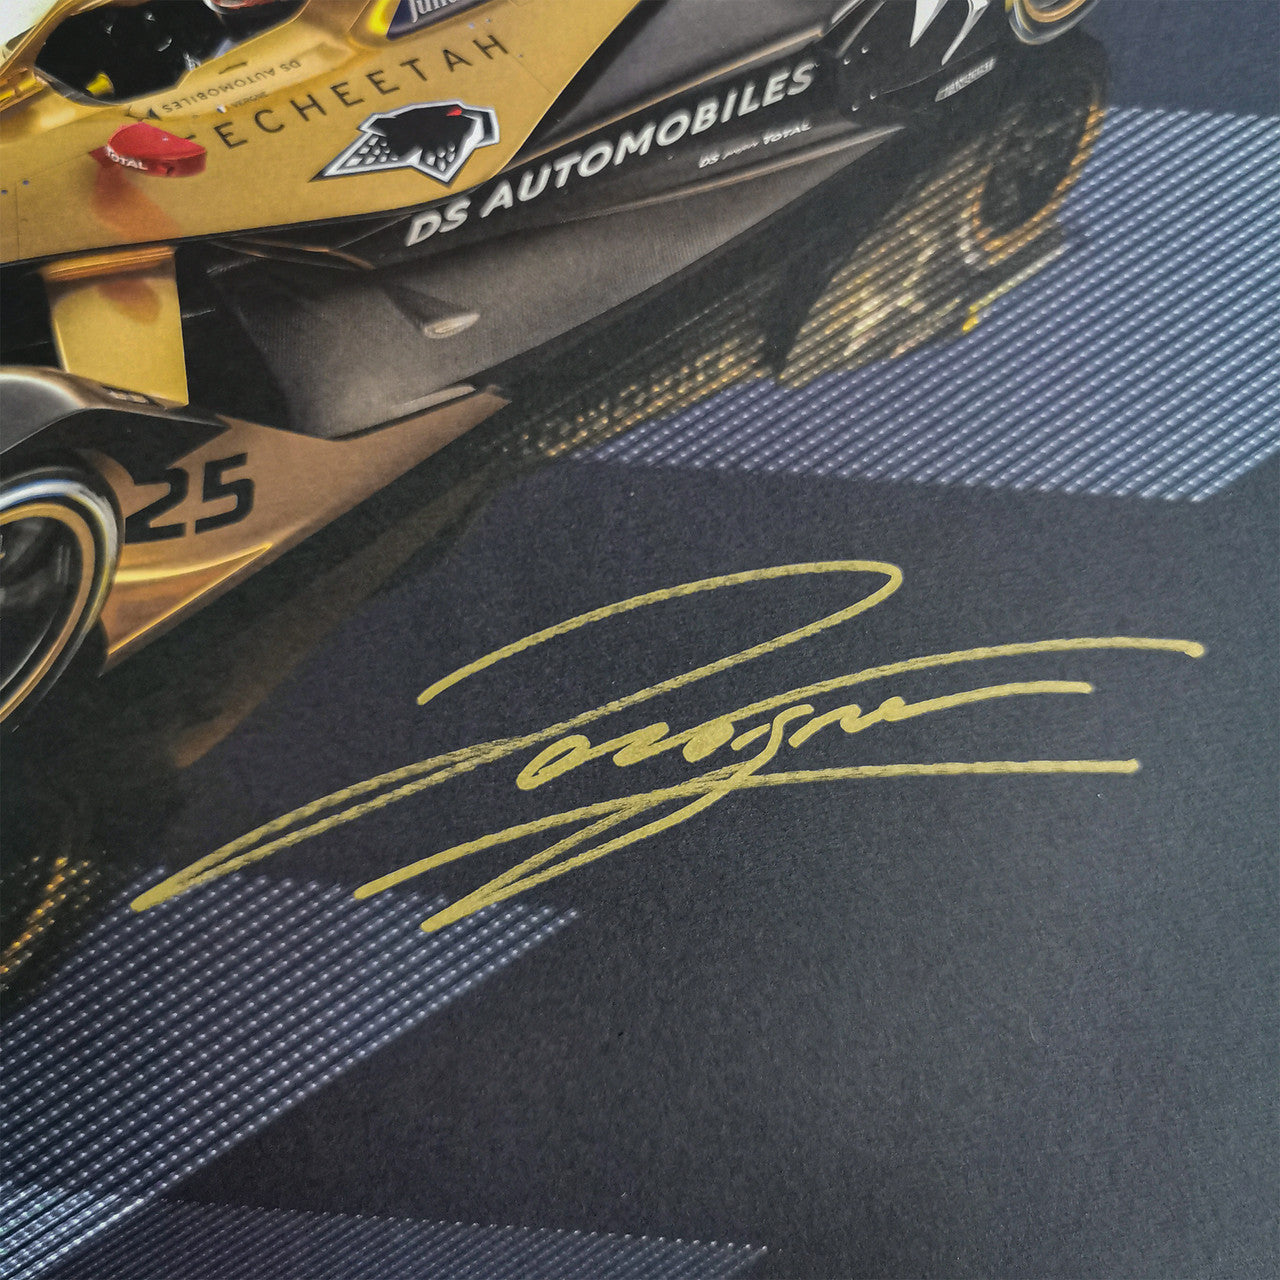 DS TECHEETAH - Formula E Team - Jean-Éric Vergne | Limited Edition | Signed